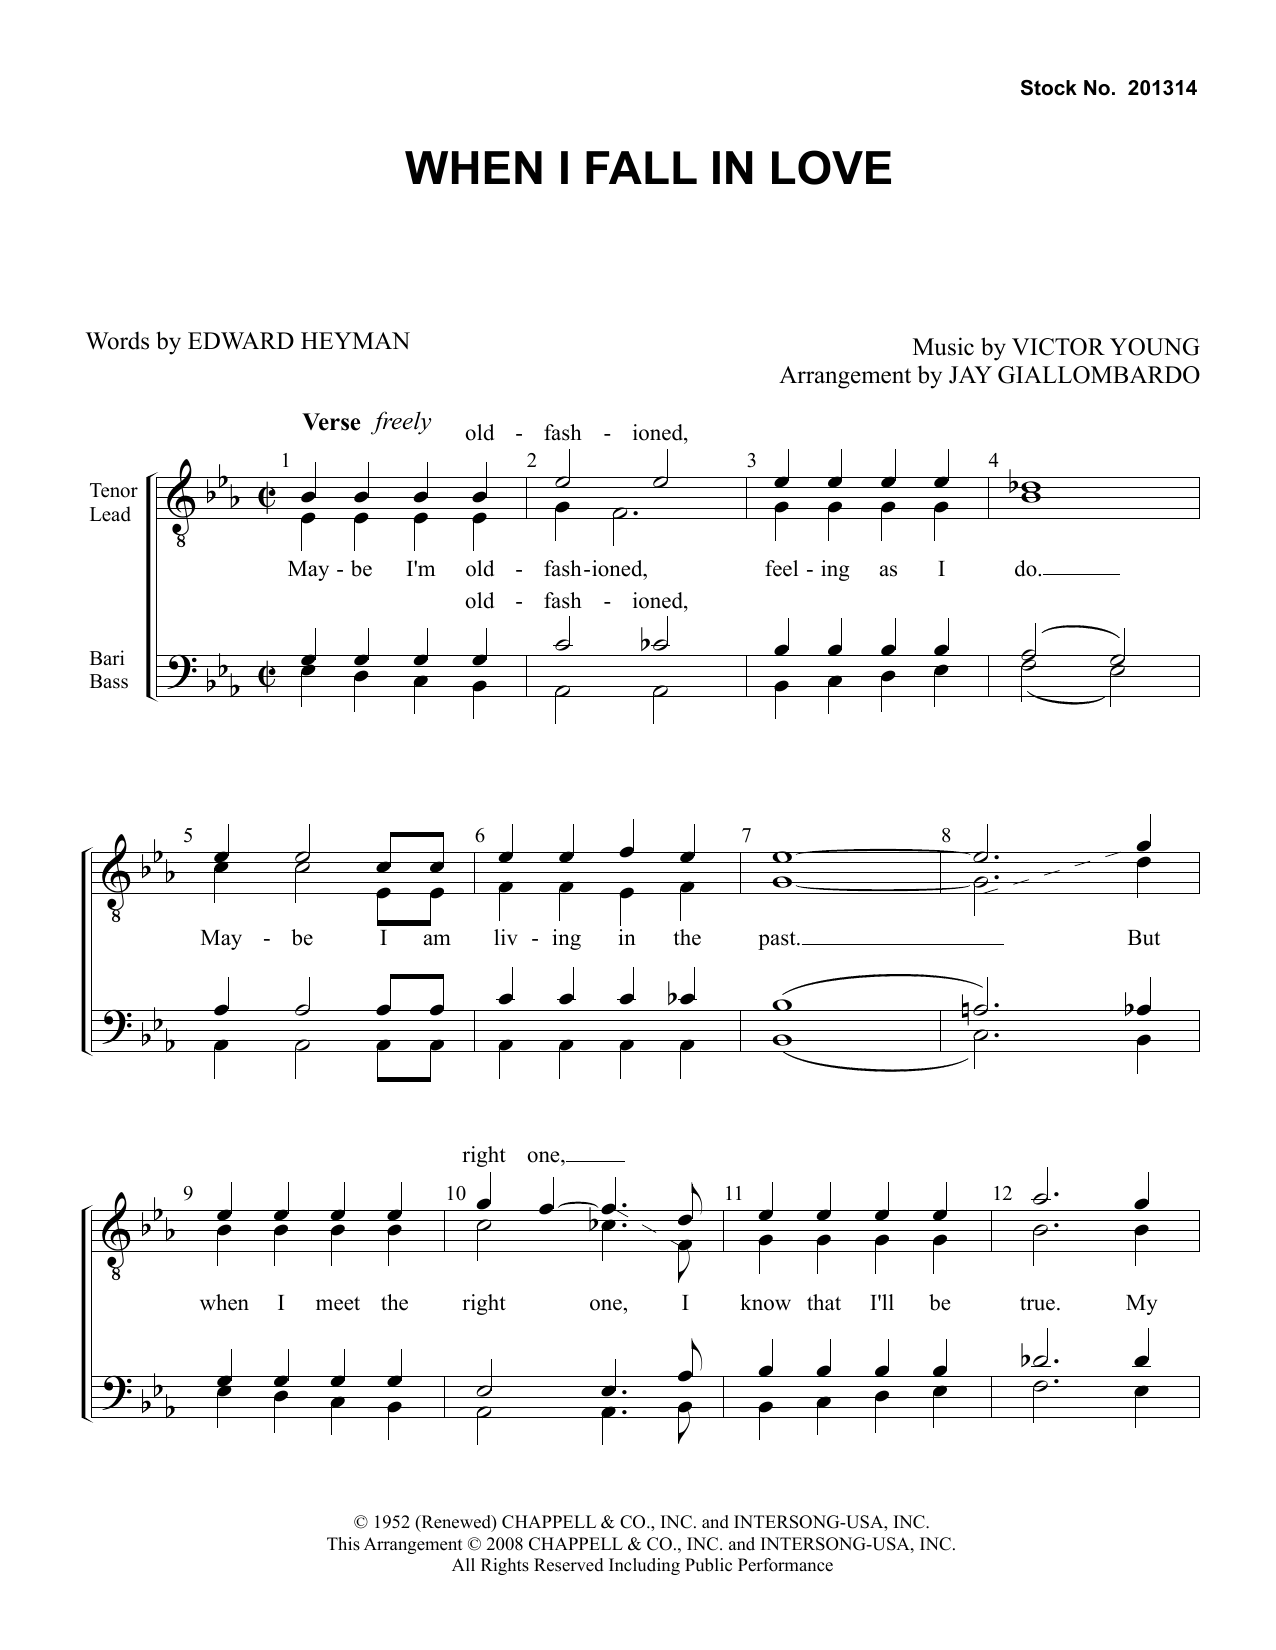 Doris Day When I Fall In Love (arr. Jay Giallombardo) Sheet Music Notes & Chords for TTBB Choir - Download or Print PDF